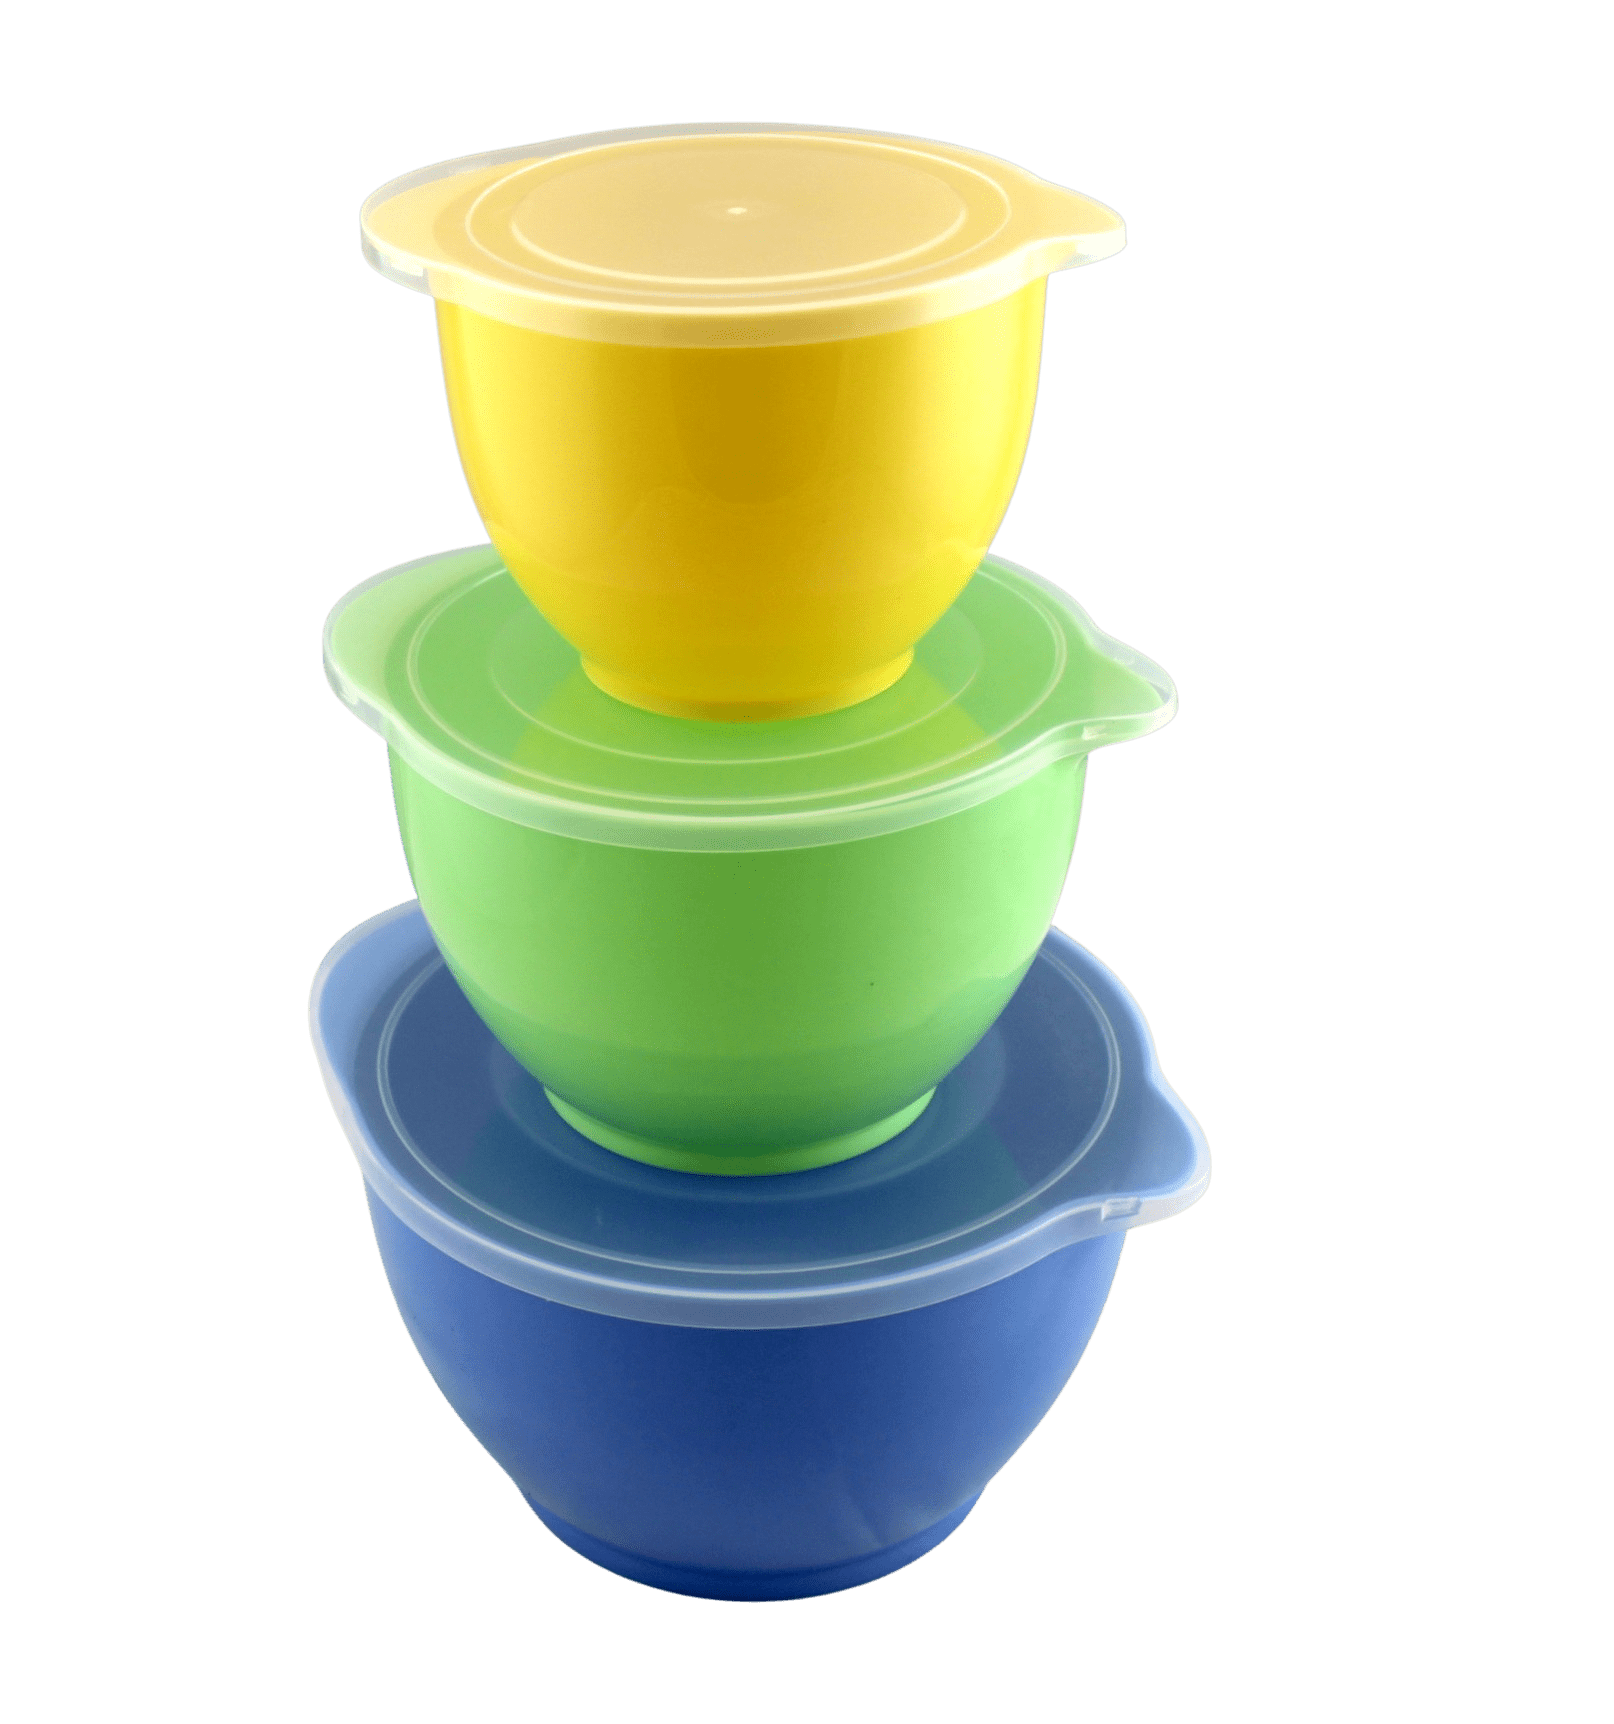 Tupperware Brand Wonderlier Bowl Set - 3 Containers to Prep, Store & Serve  Meals + Lids - Dishwasher Safe - BPA Free